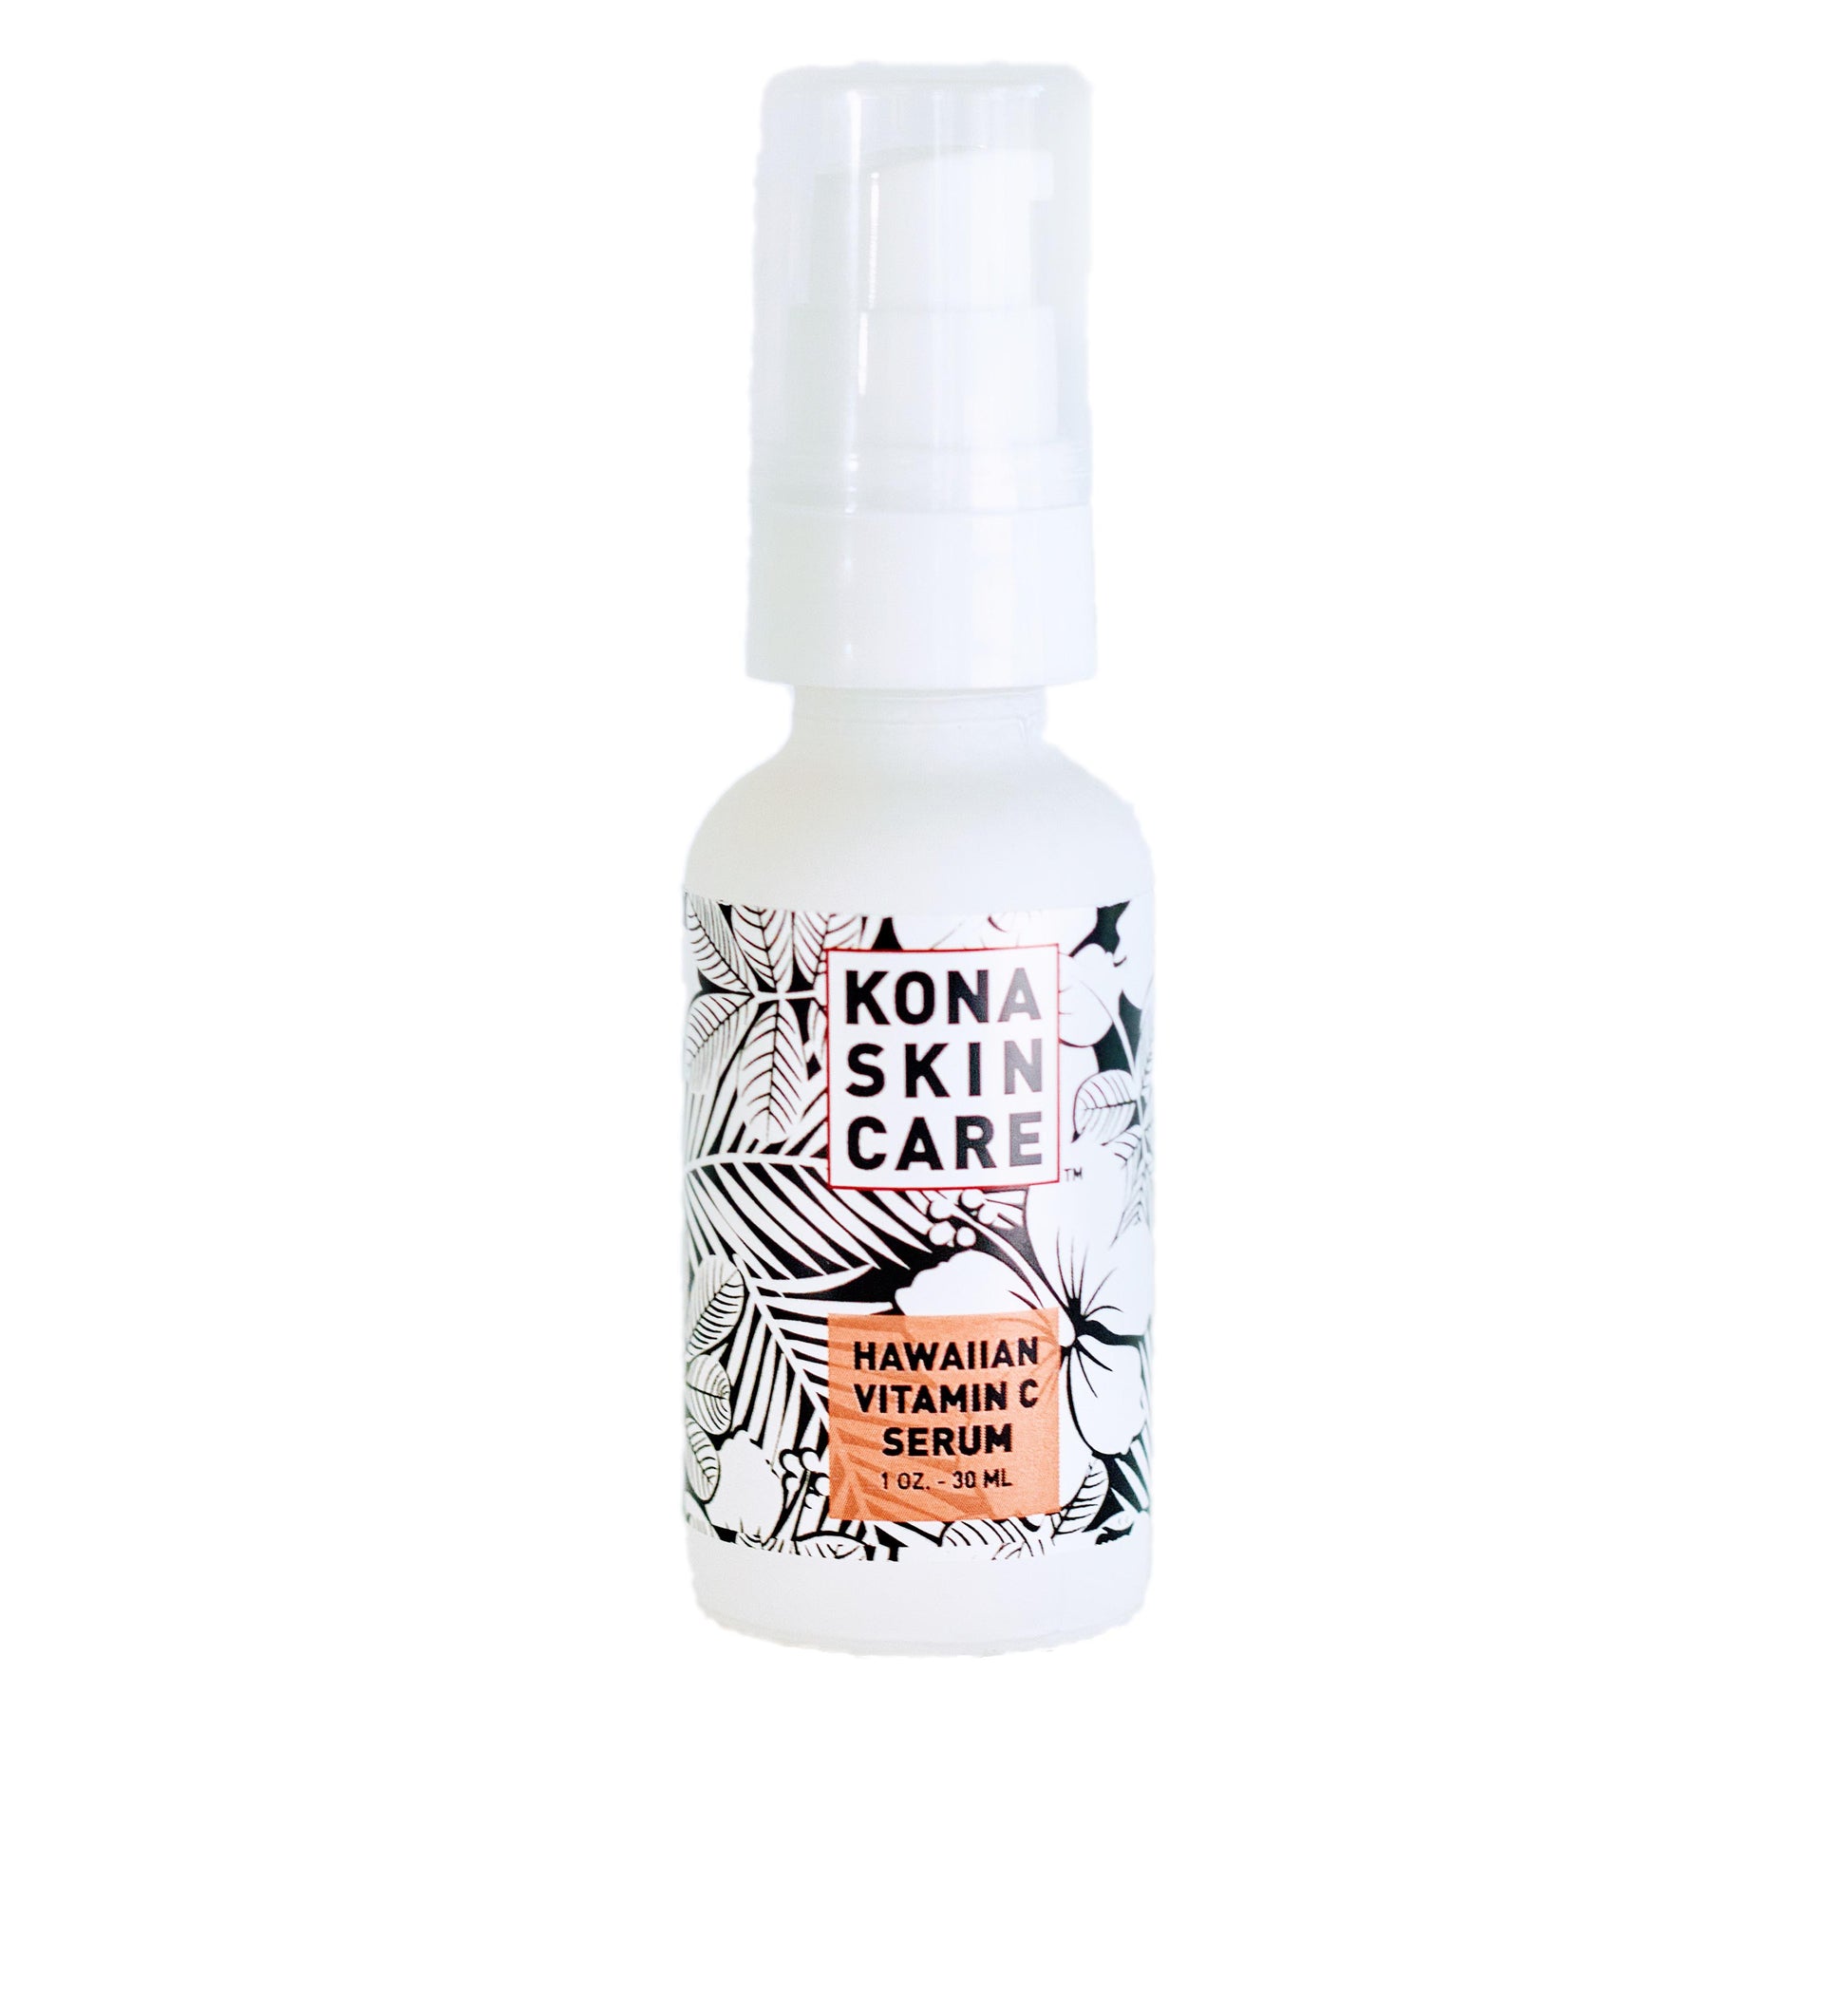 Kona Skincare Hawaiian Vitamin C Serum 1 oz bottle only